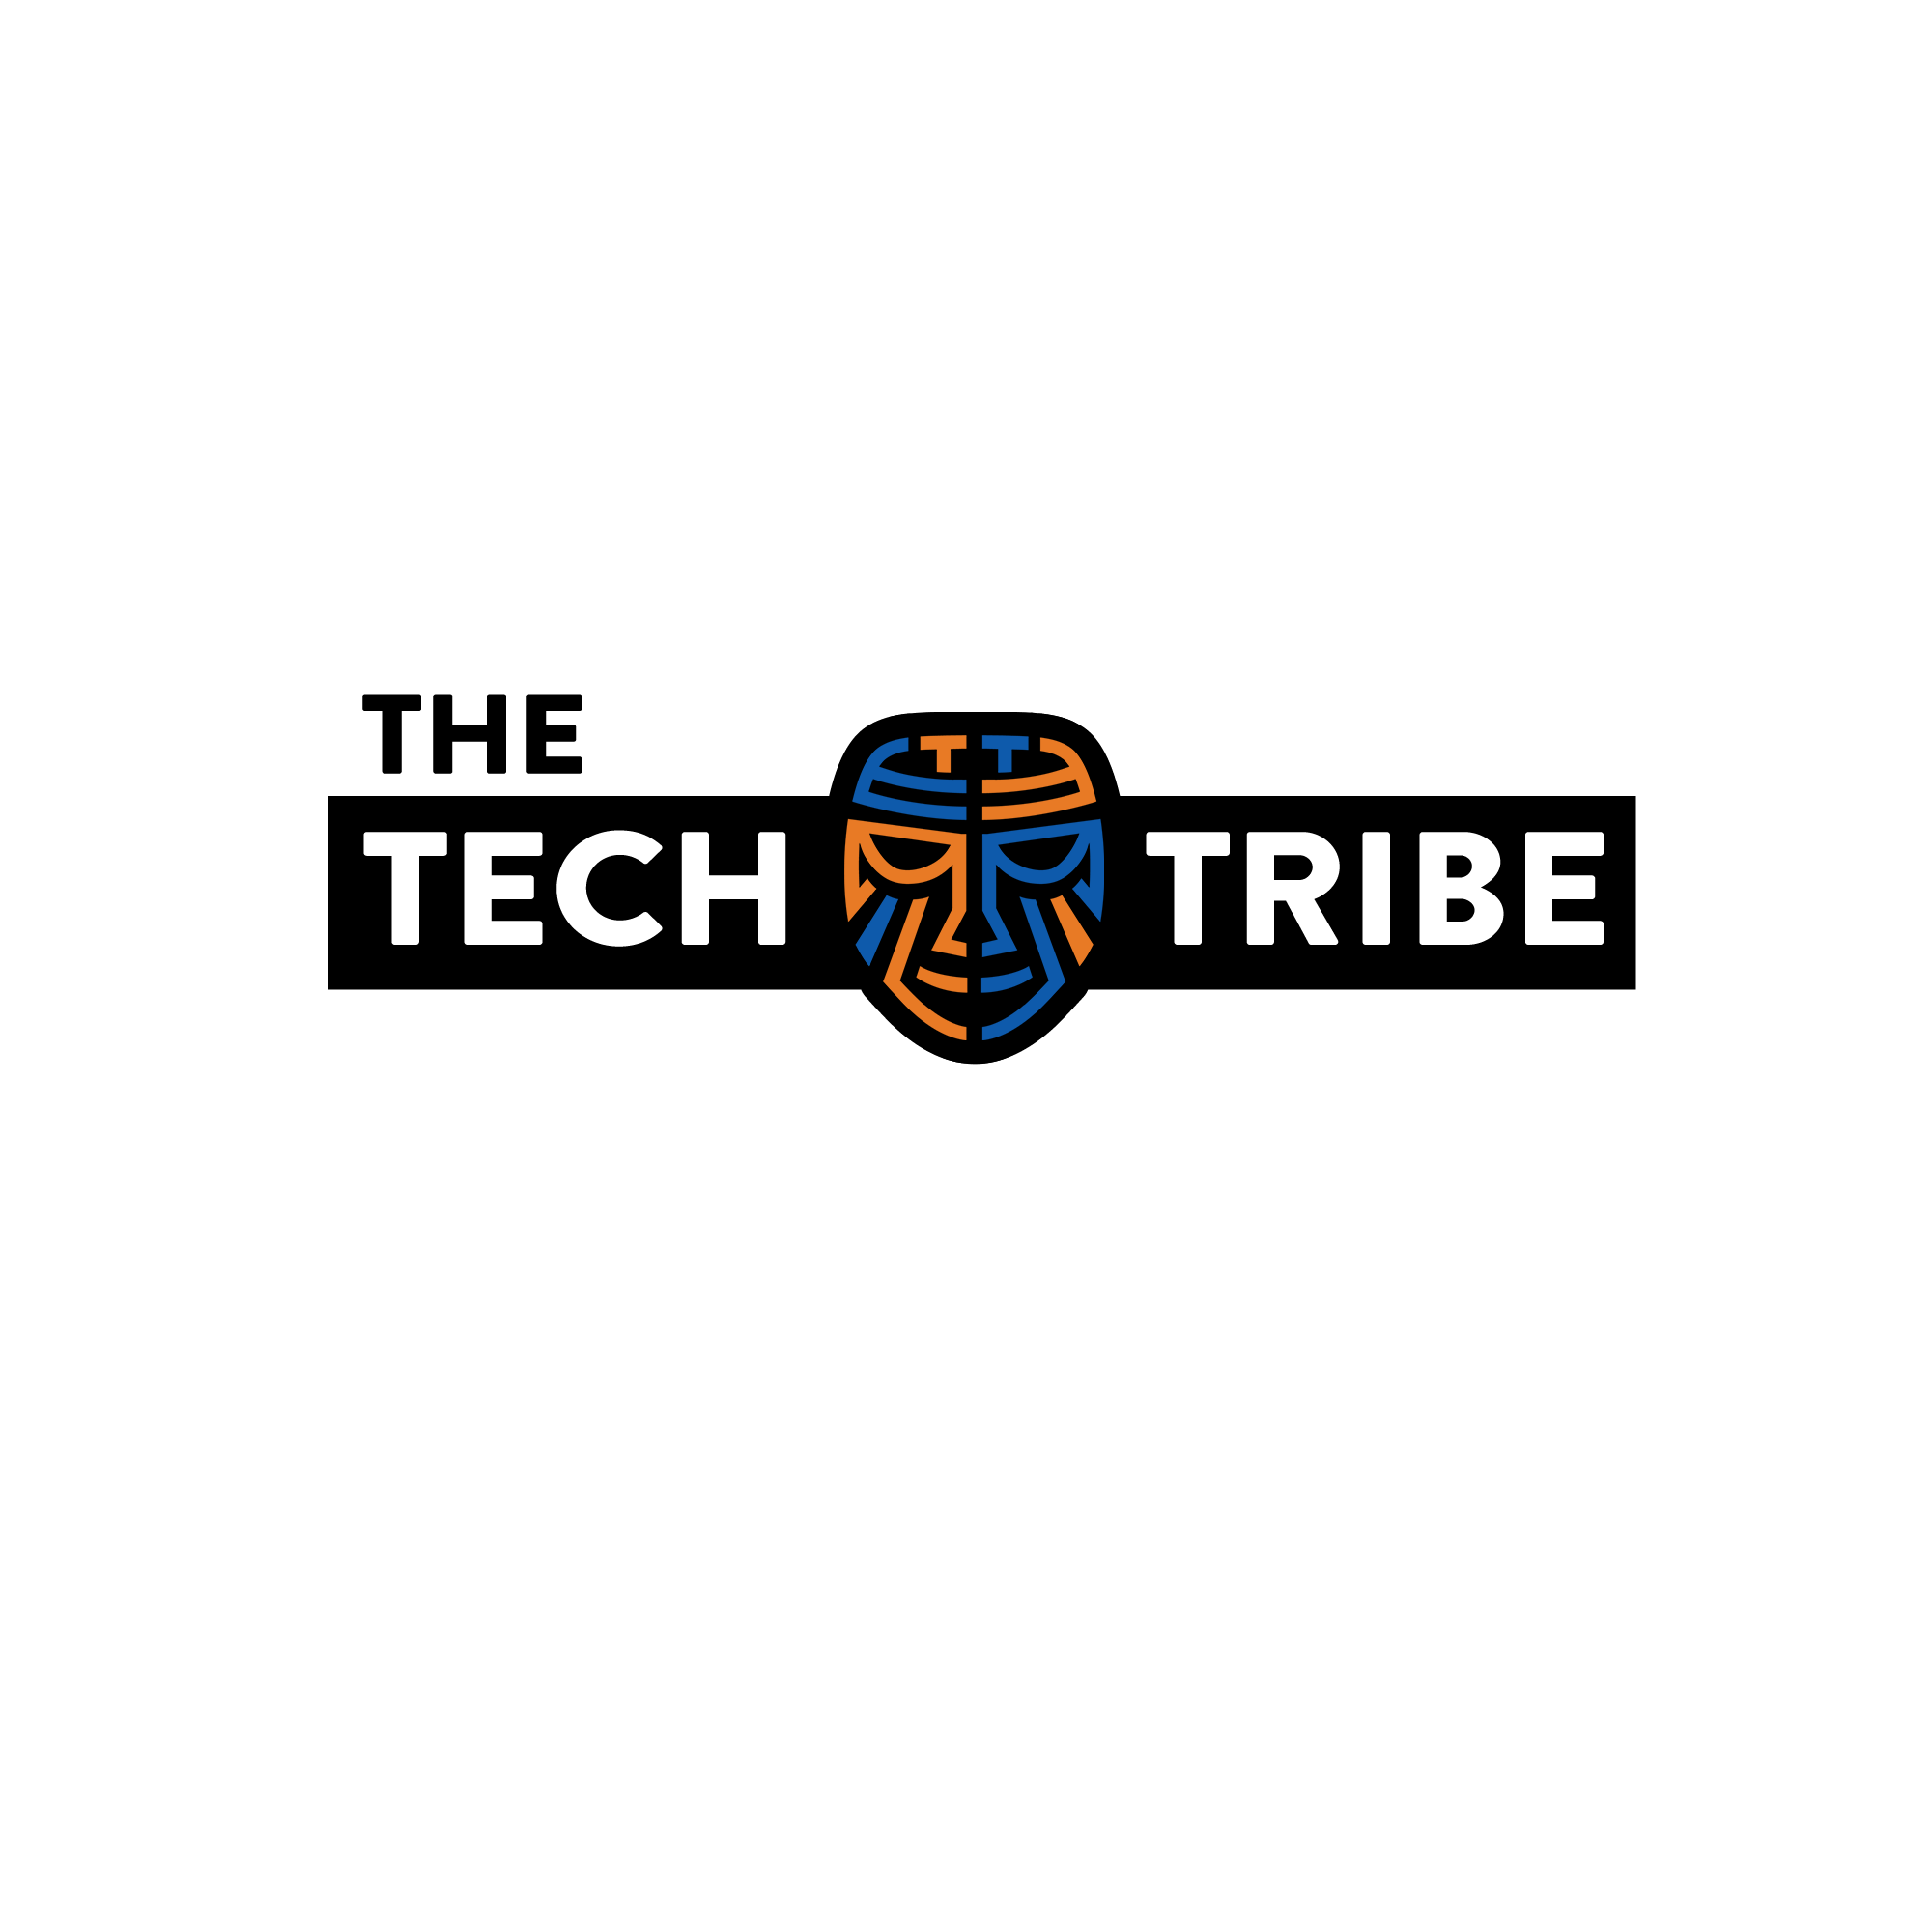 The Tech Tribe